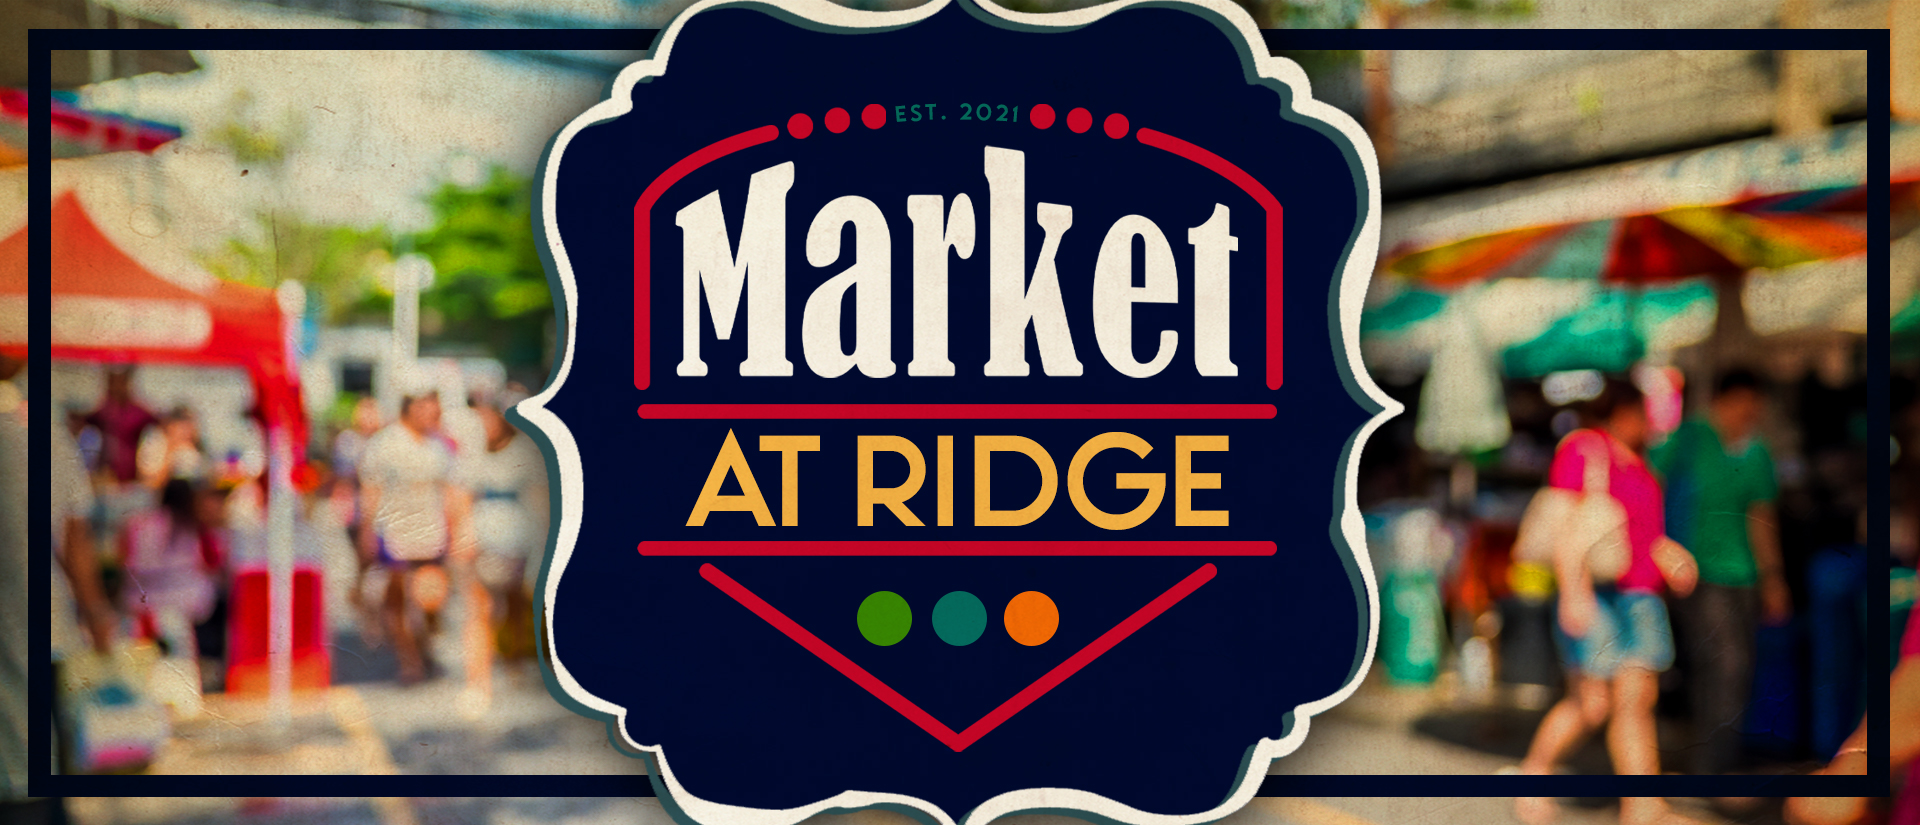 Market at Ridge